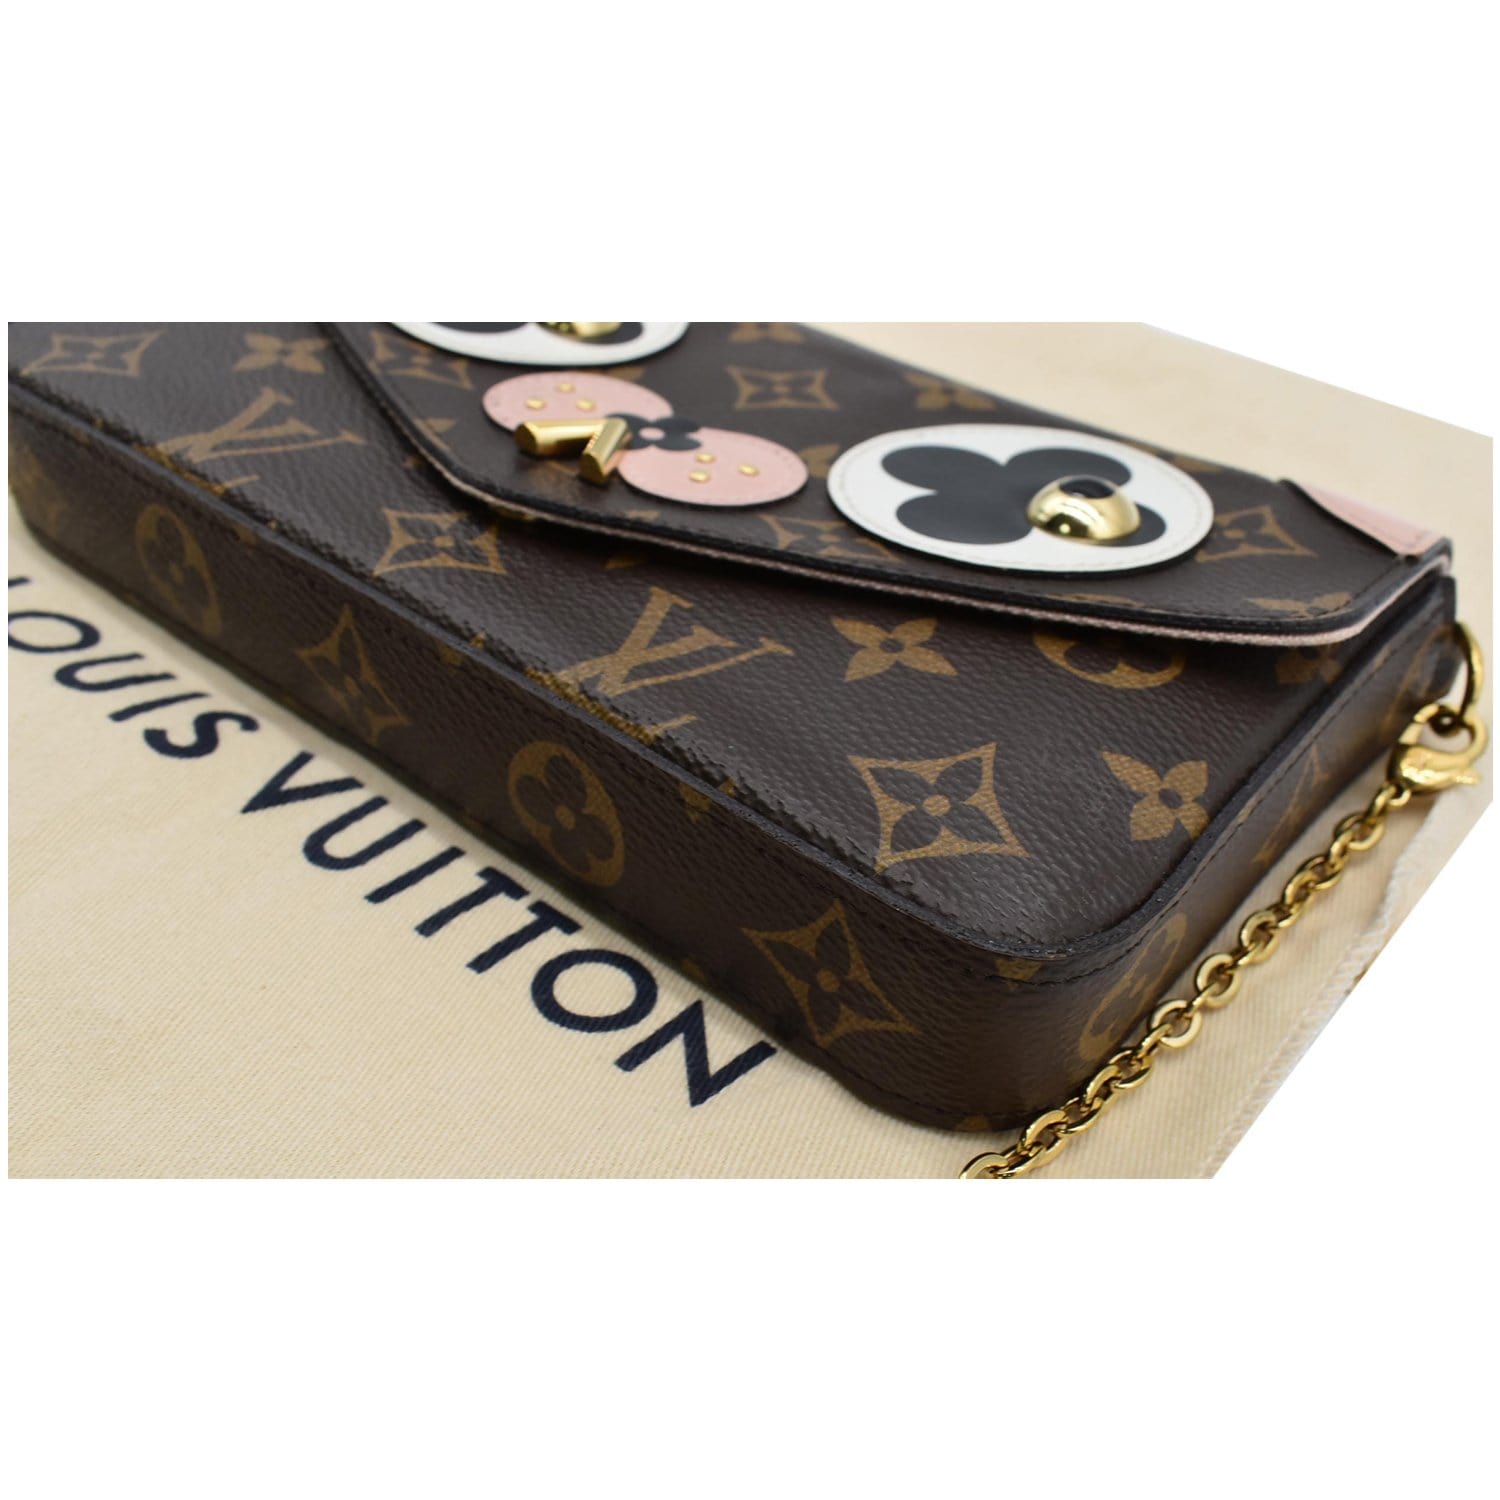 Louis Vuitton Felice Dog Bag - Designer WishBags